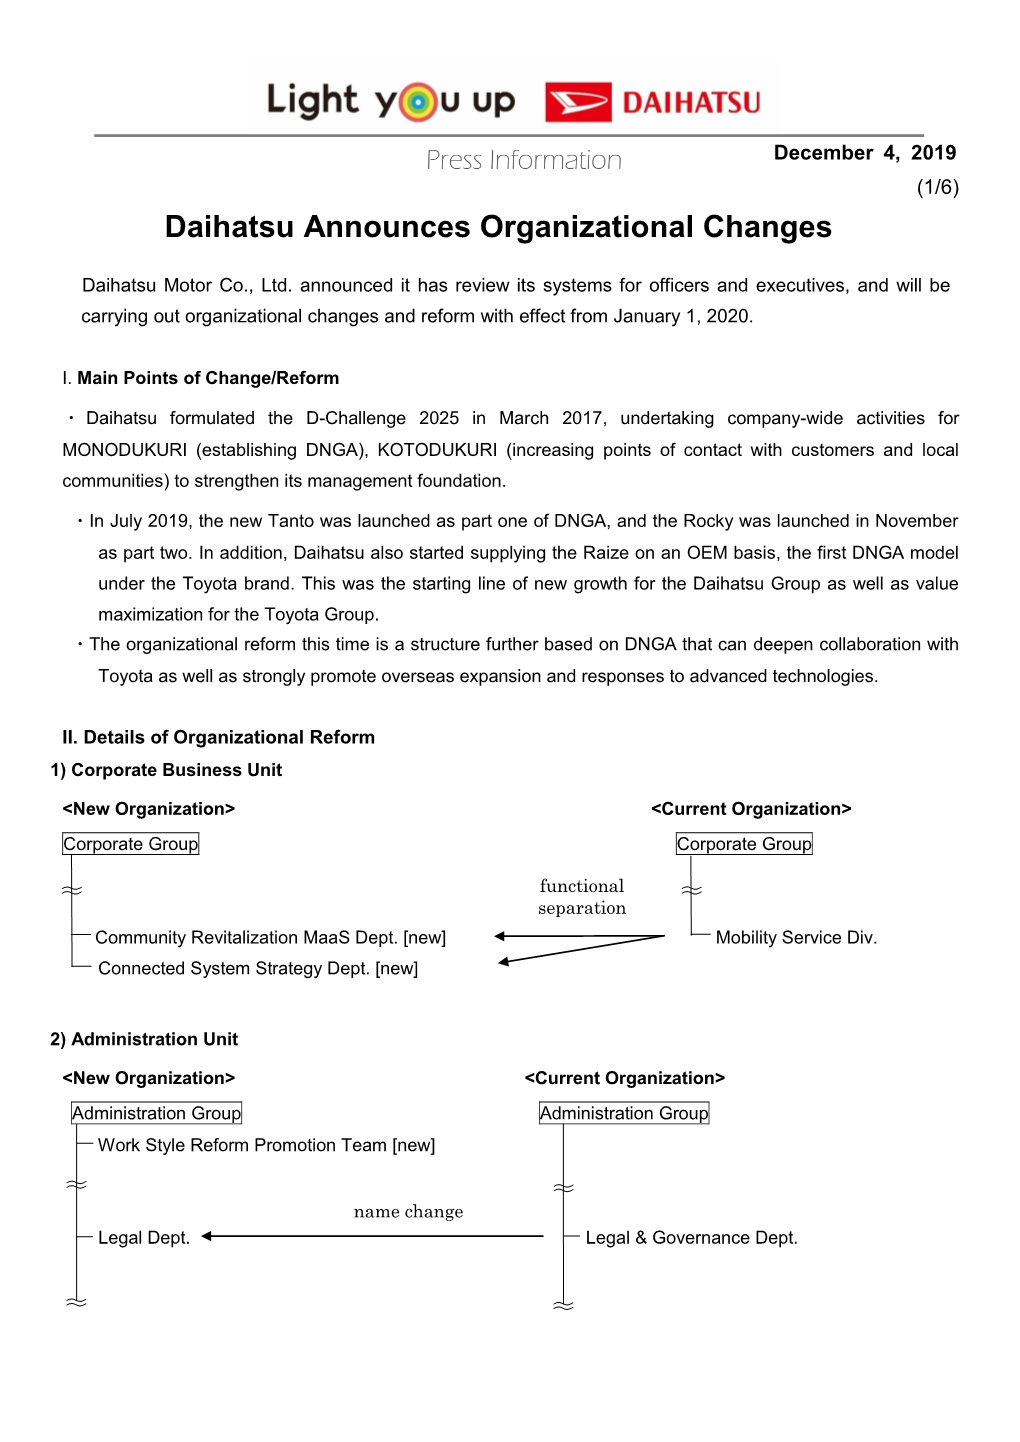 Dec. 04, 2019 Company Daihatsu Announces Organizational Changes